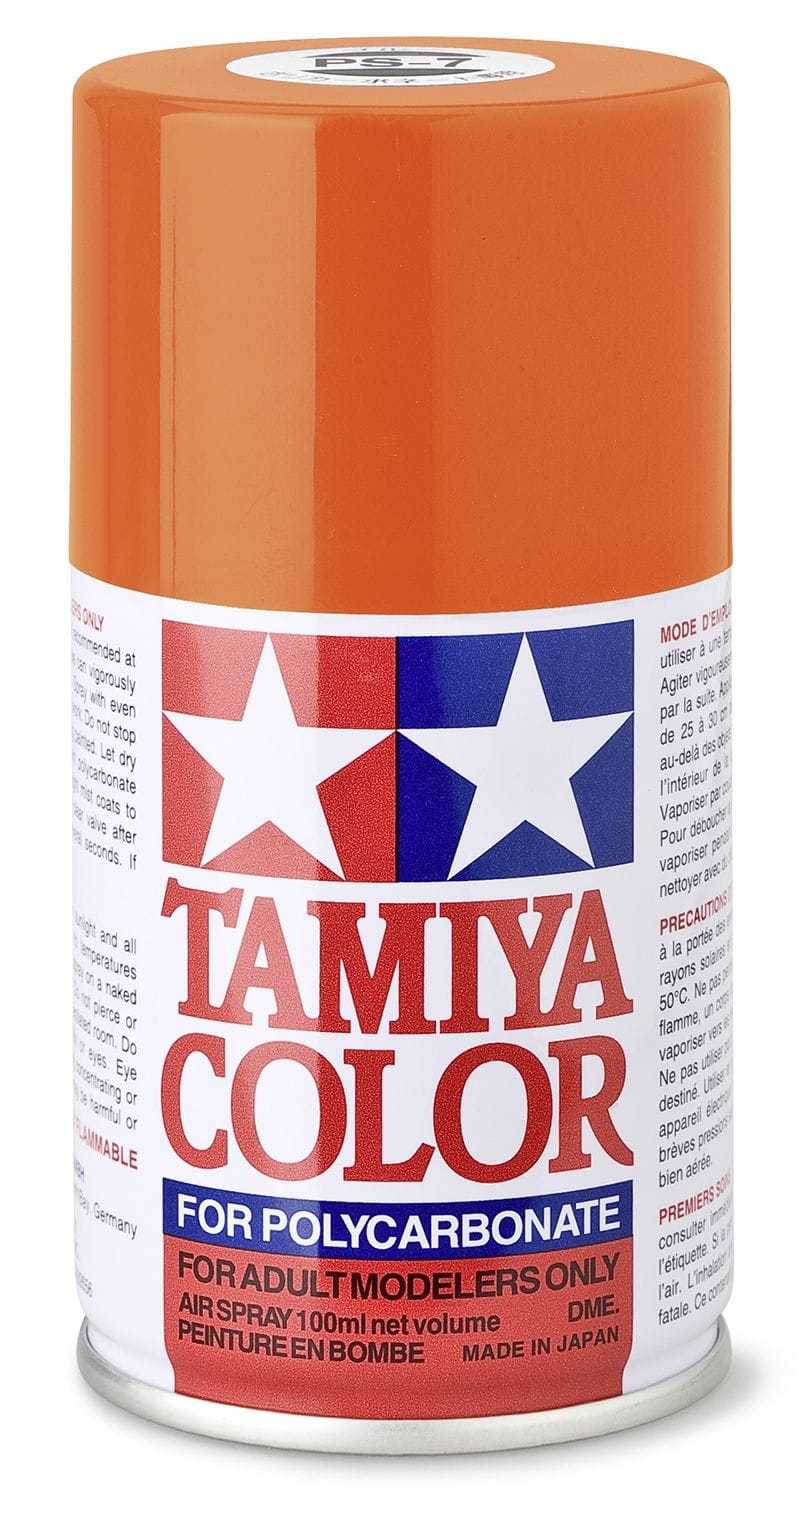 Tamiya PS-7 ORANGE Sprühfarbe 100ml für Polycarbonat ( Lexanfarbe )